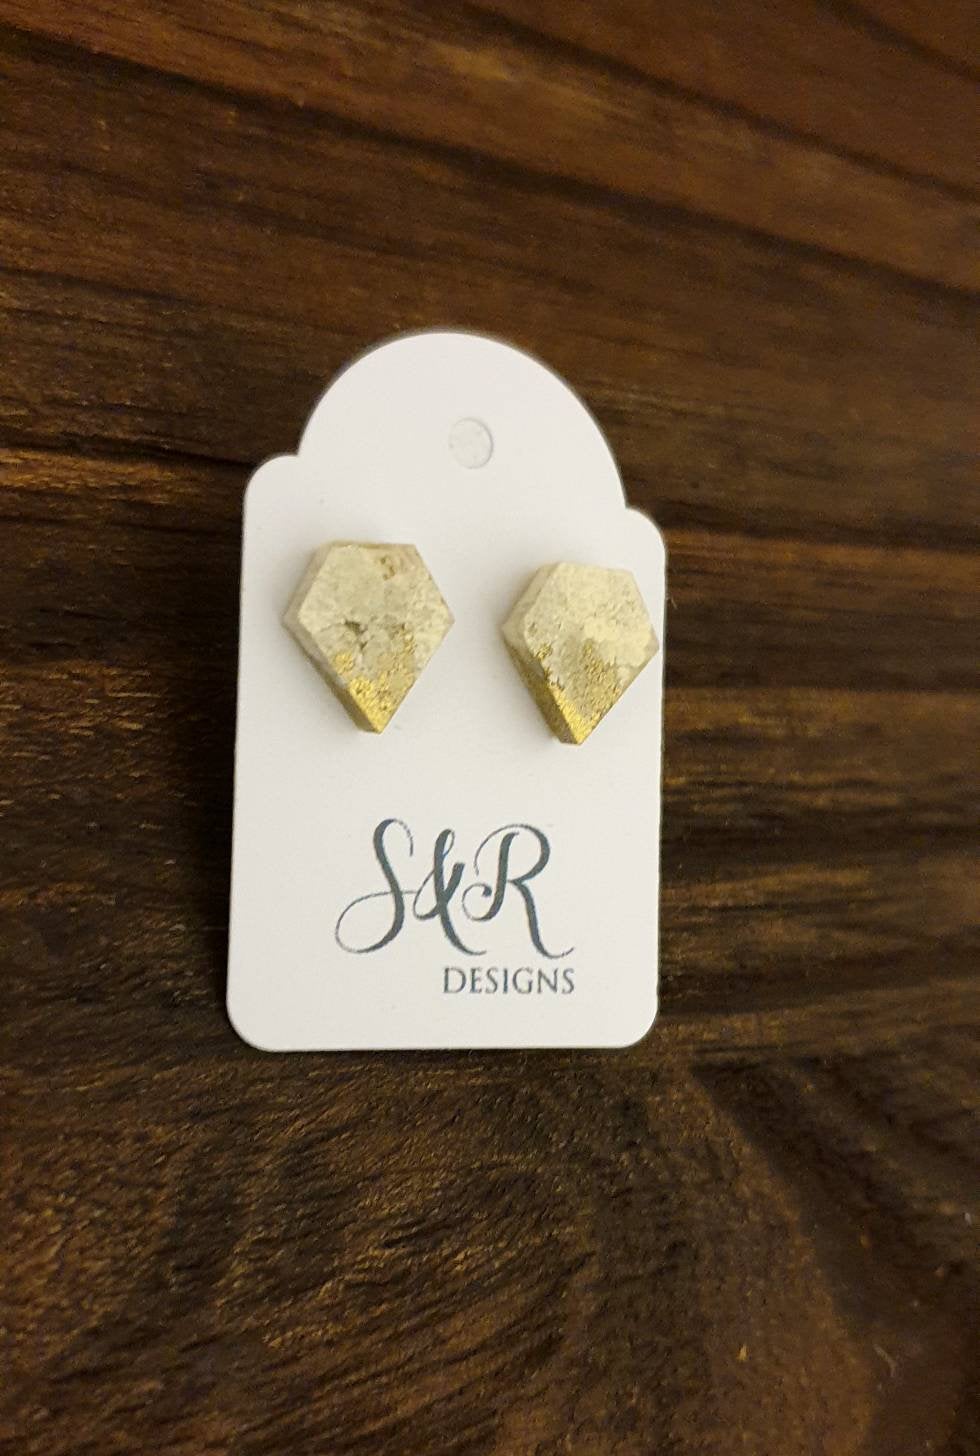 Diamond Cut Resin Stud Earrings, Stainless Steel Stud Earrings. Gold and White Mix Earrings.